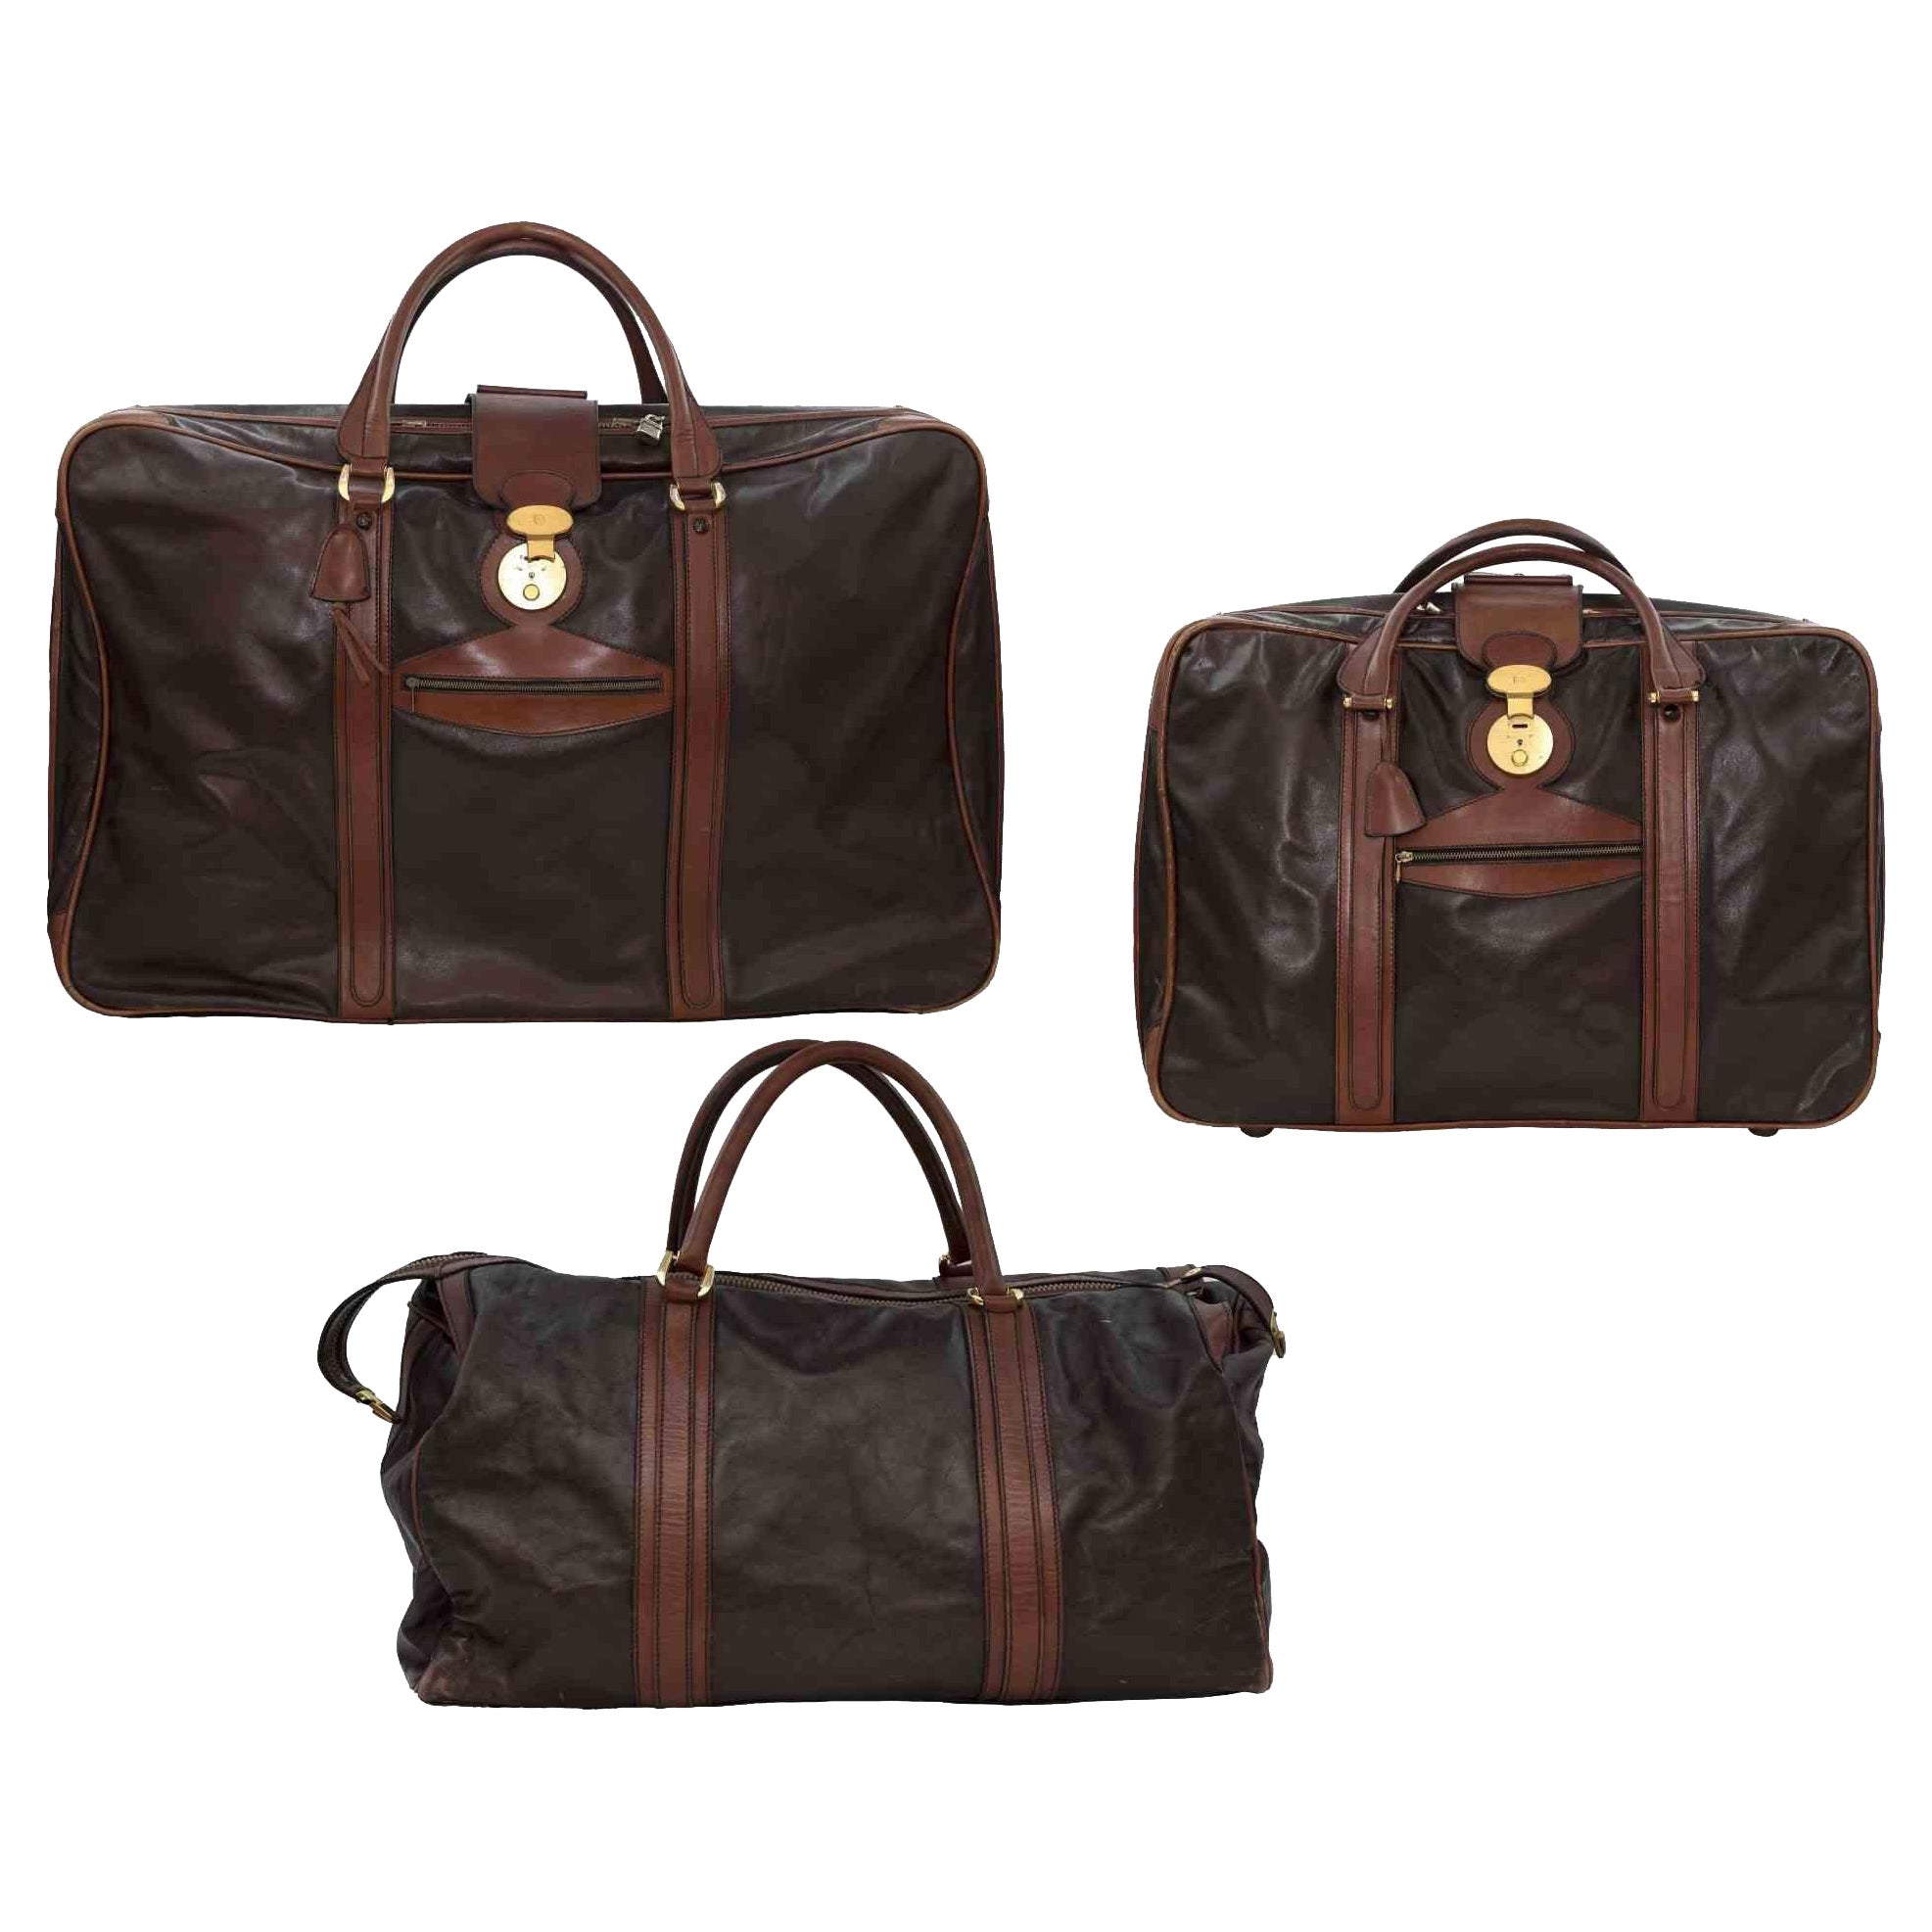 Nazareno Gabrielli Vintage Suitcases Brown Leather, 1970s